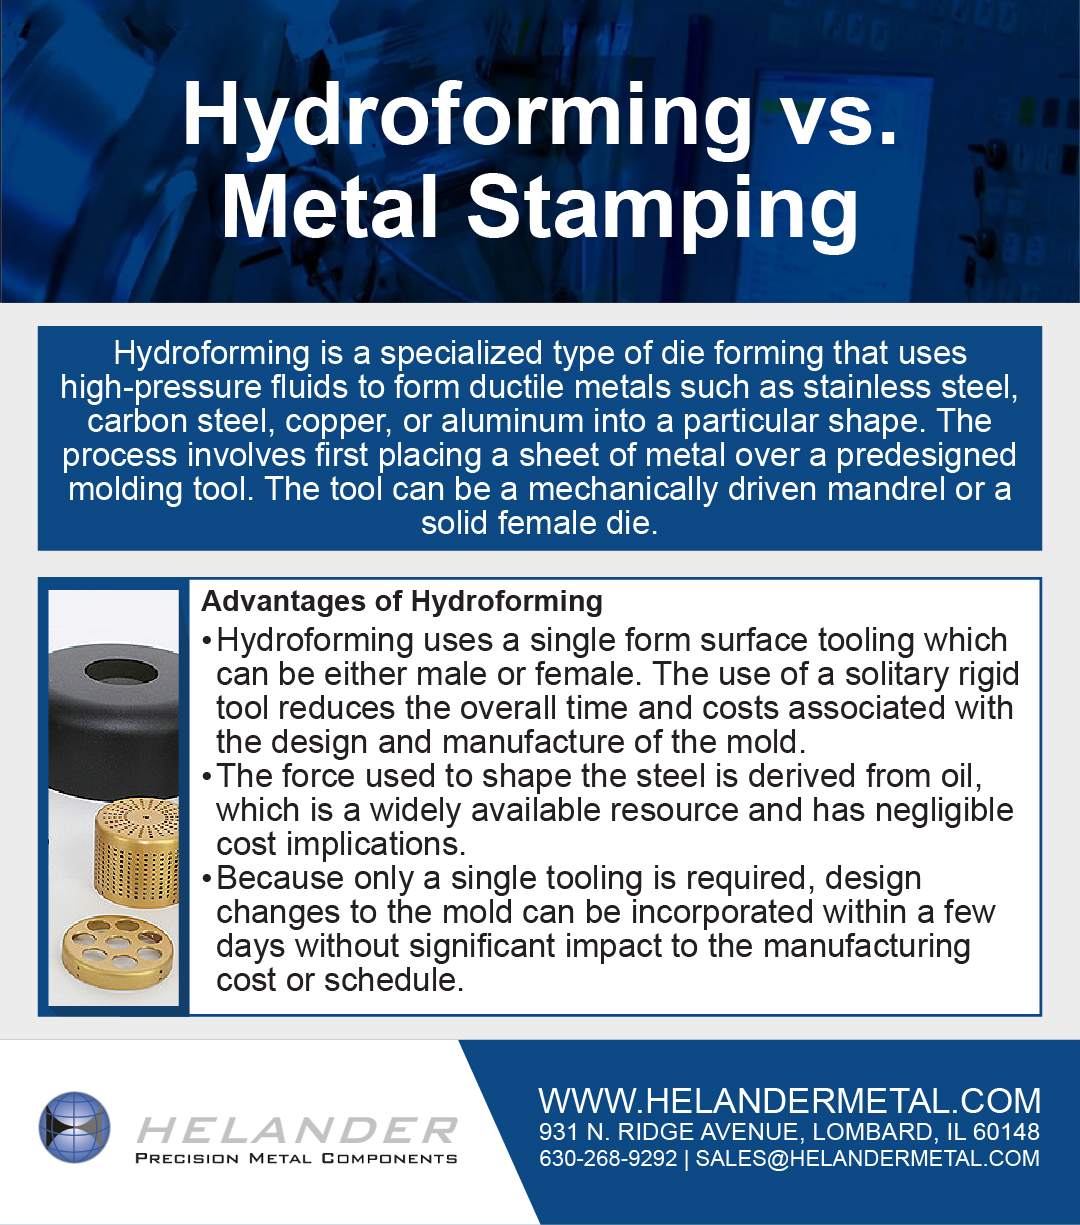 Hydroforming Vs. Meral Stamping